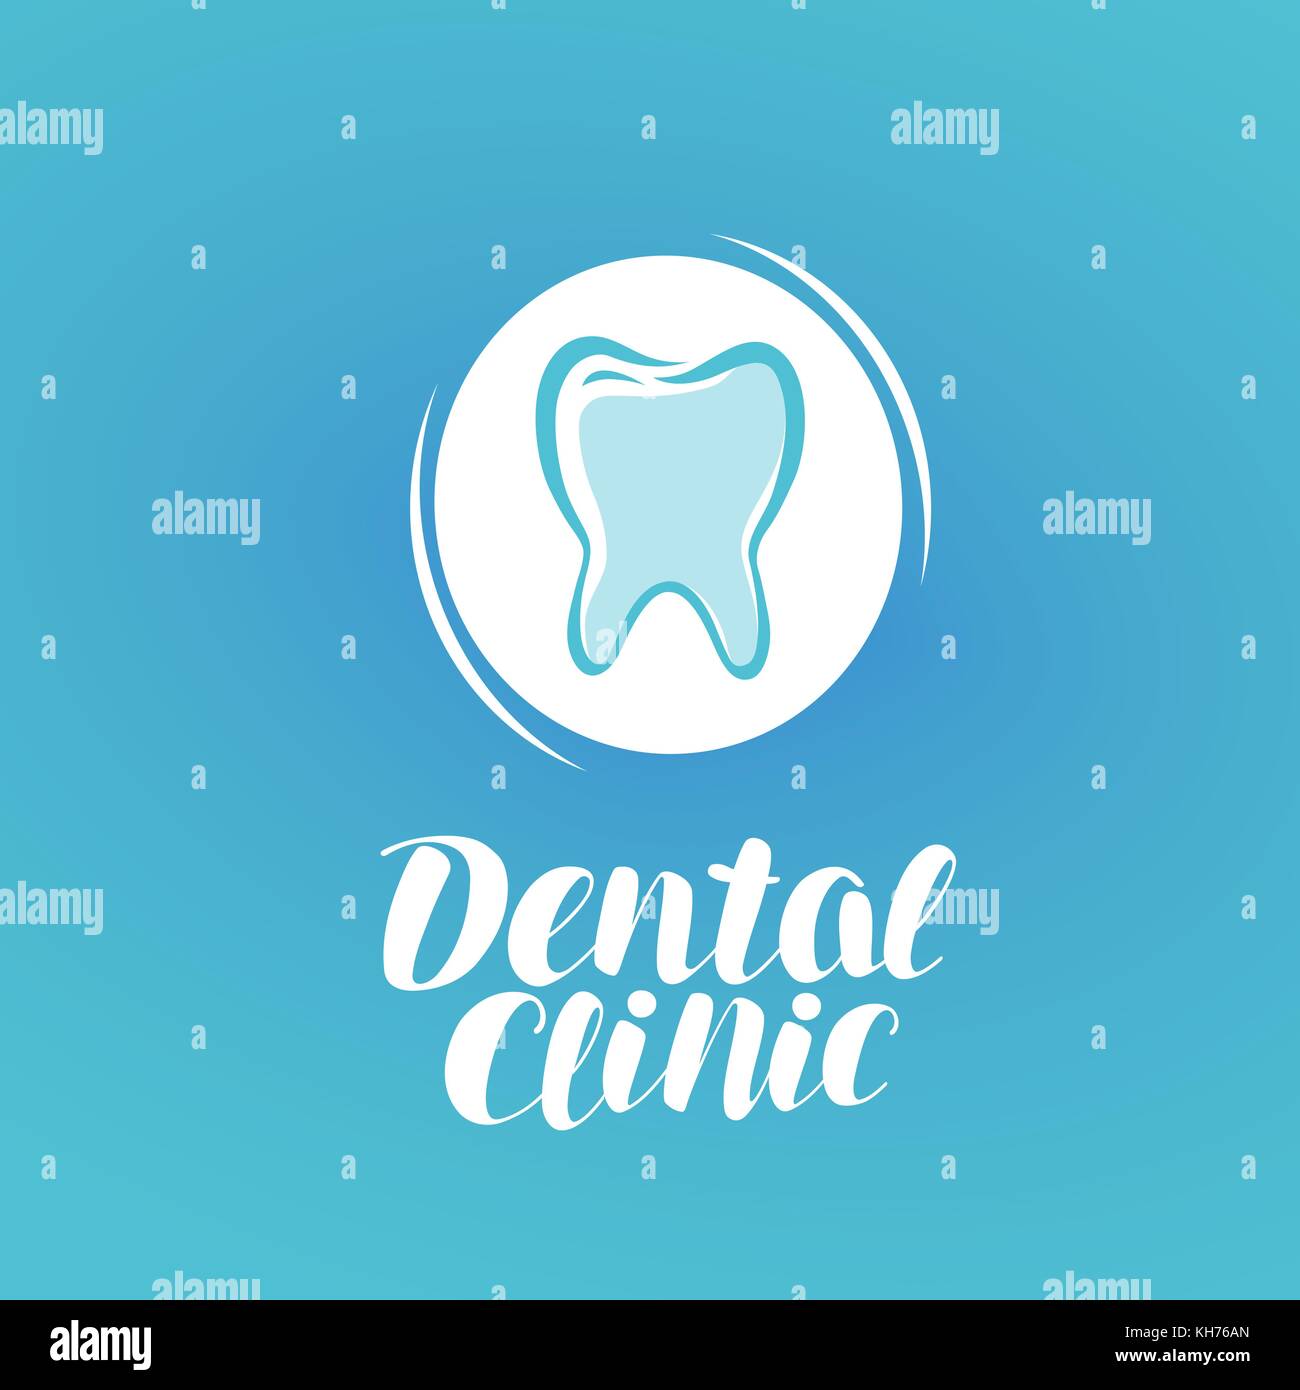 Dental clinic logo. Dentistry, tooth, medicine icon or symbol. Vector illustration Stock Vector